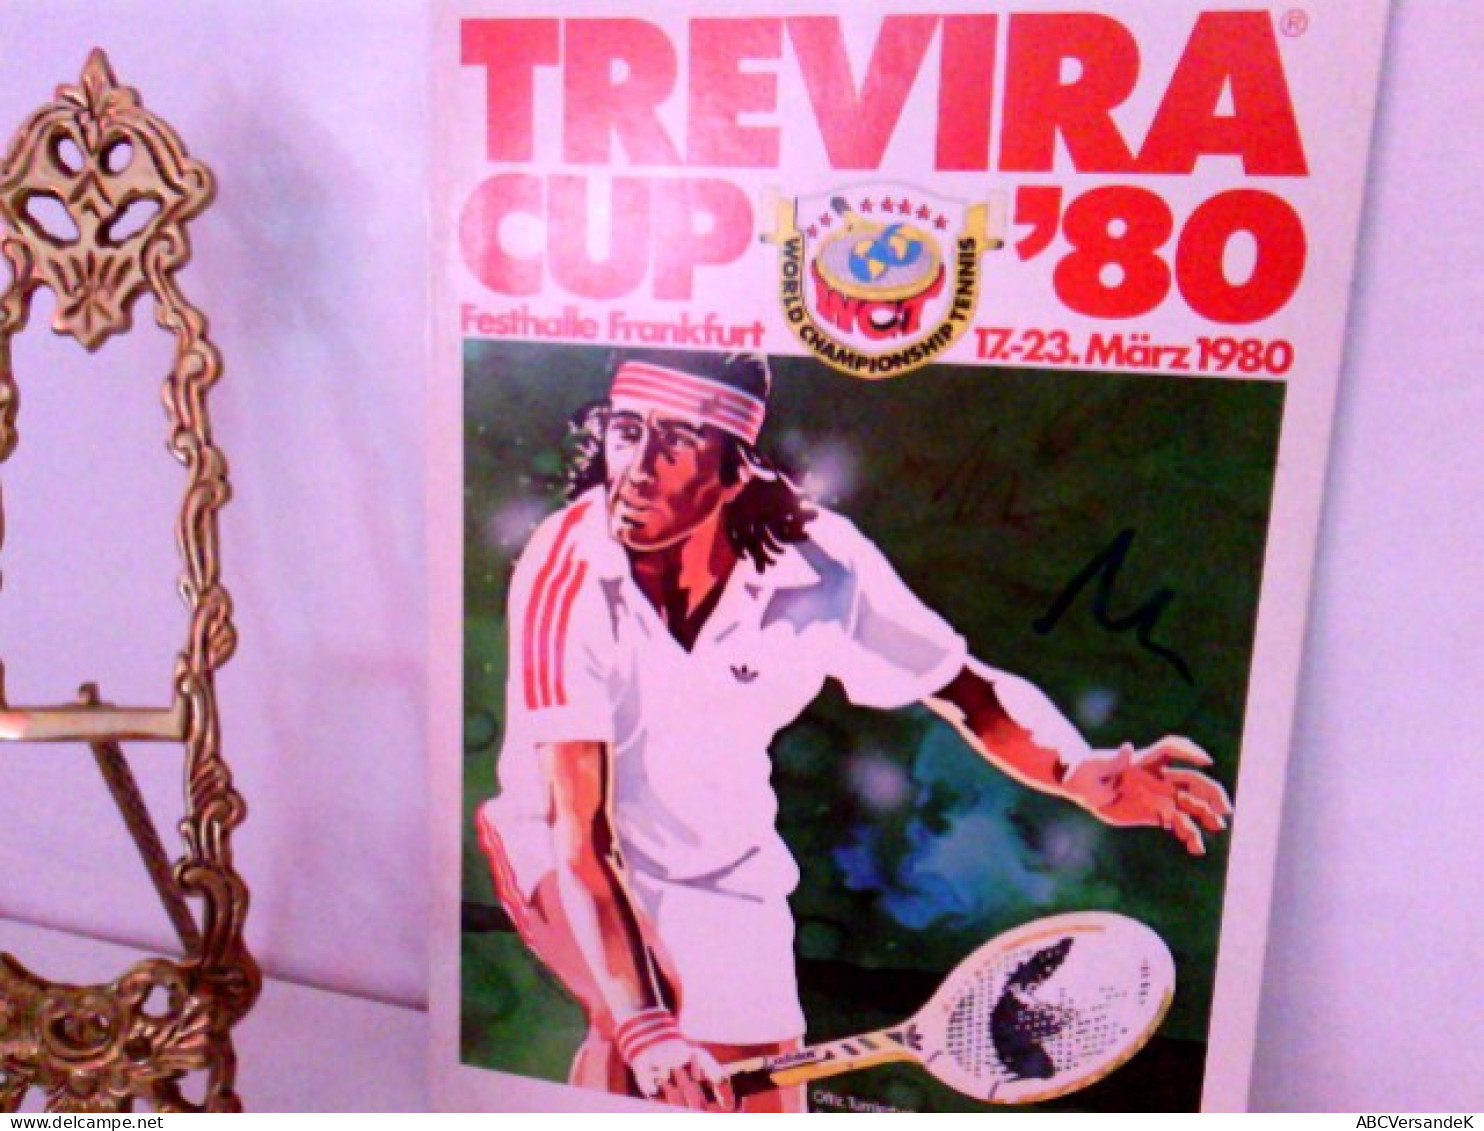 World Championship Tennis - TREVIRA CUP '80 Festhalle Frankfurt 17.- 23. März 1980 - Sport